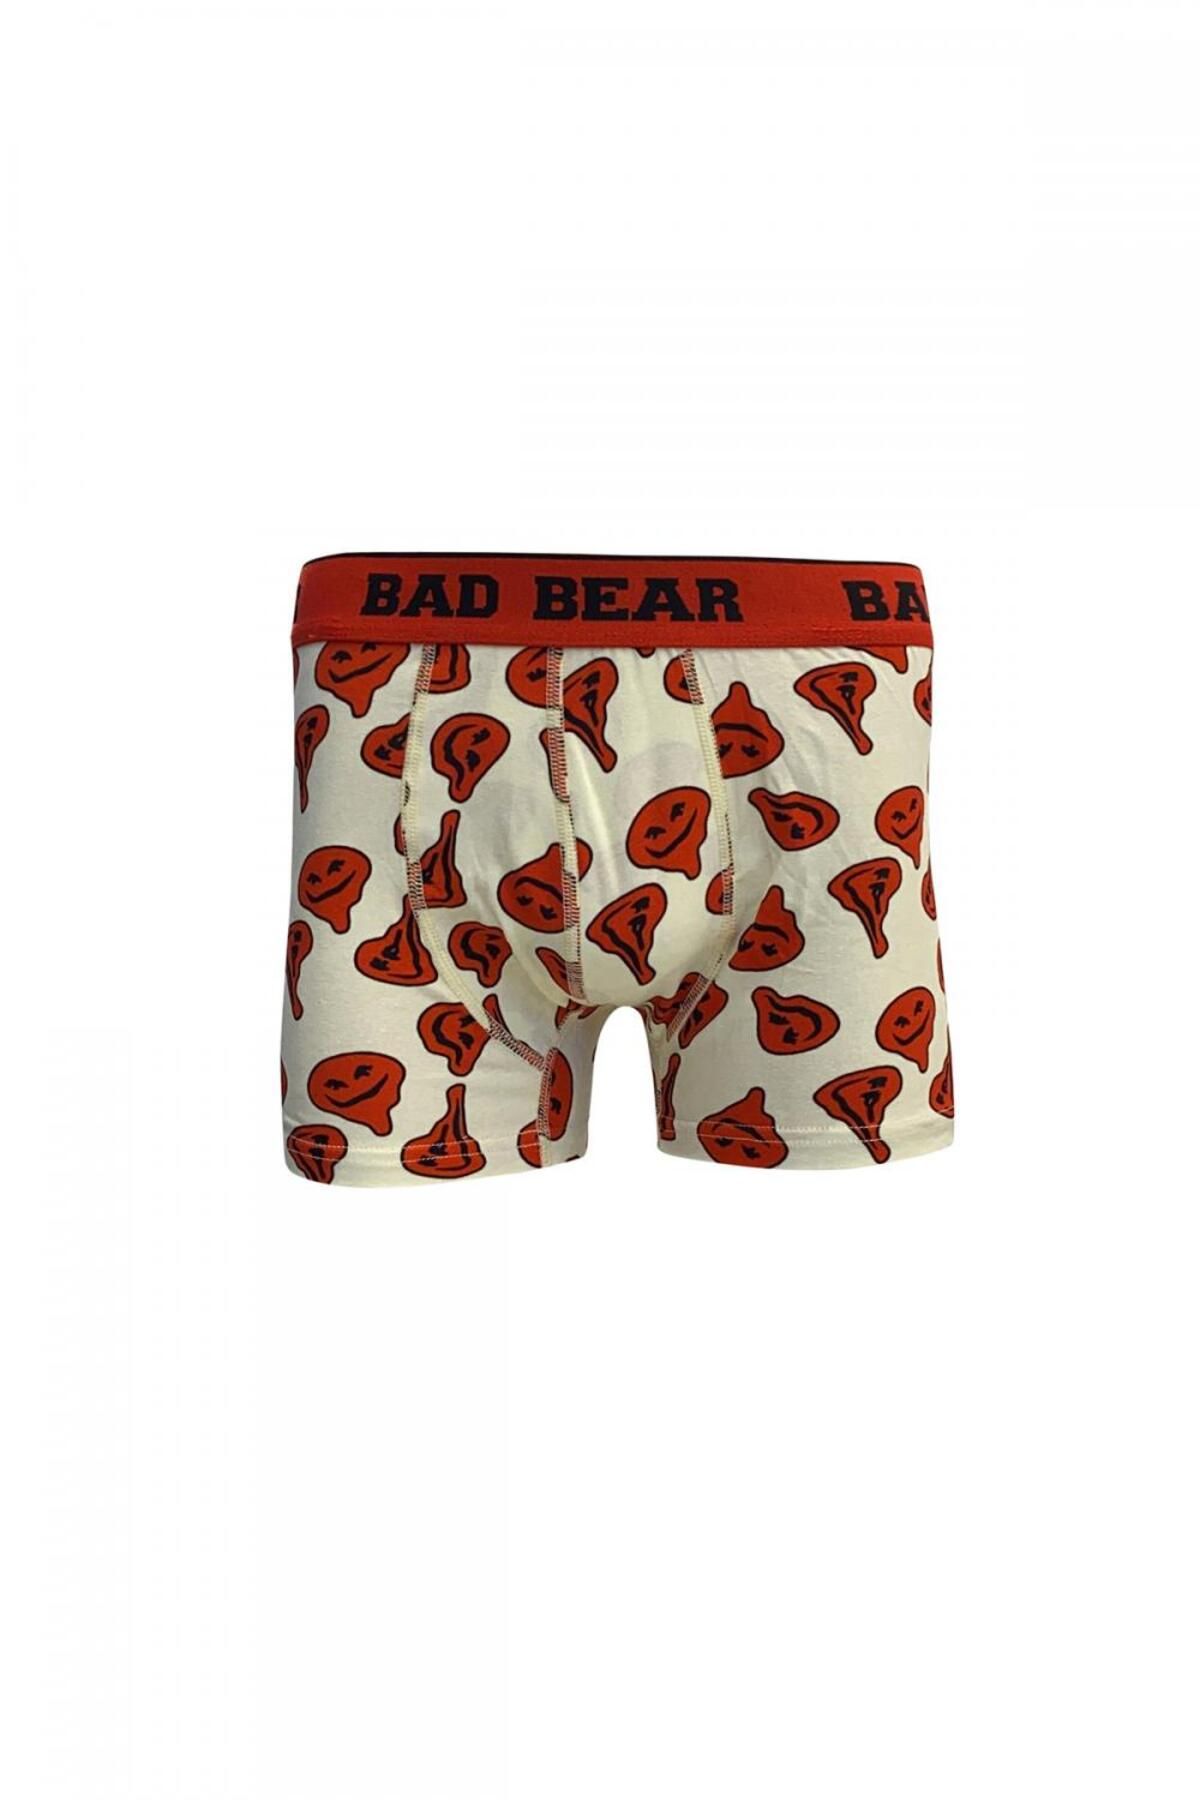 Bad Bear 21.01.03.007 Erkek Melt Boxer